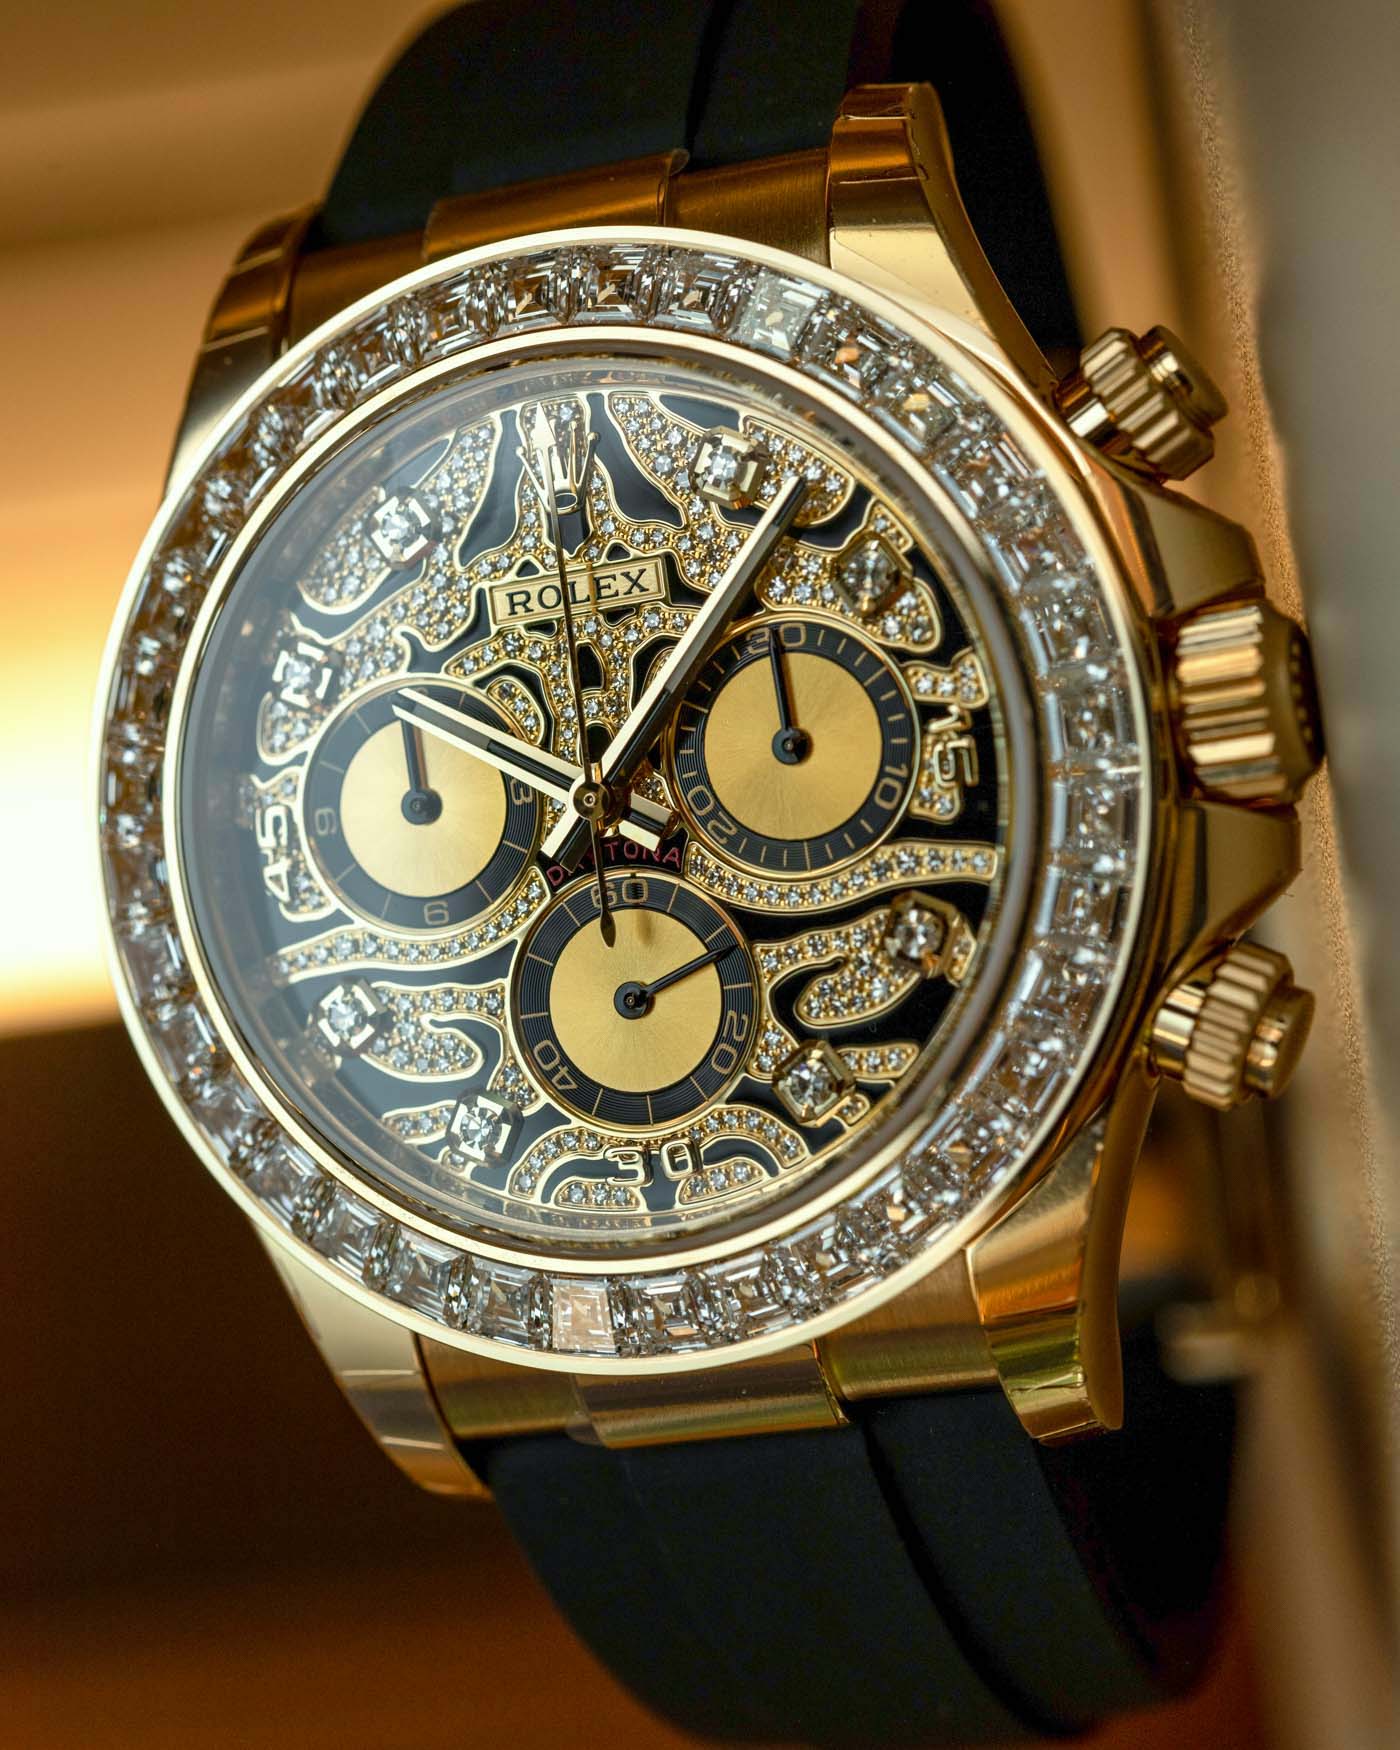 Hands On Rolex Daytona 1165tbr Eye Of The Tiger Or Rorschach Test Diamond Set Watch Ablogtowatch